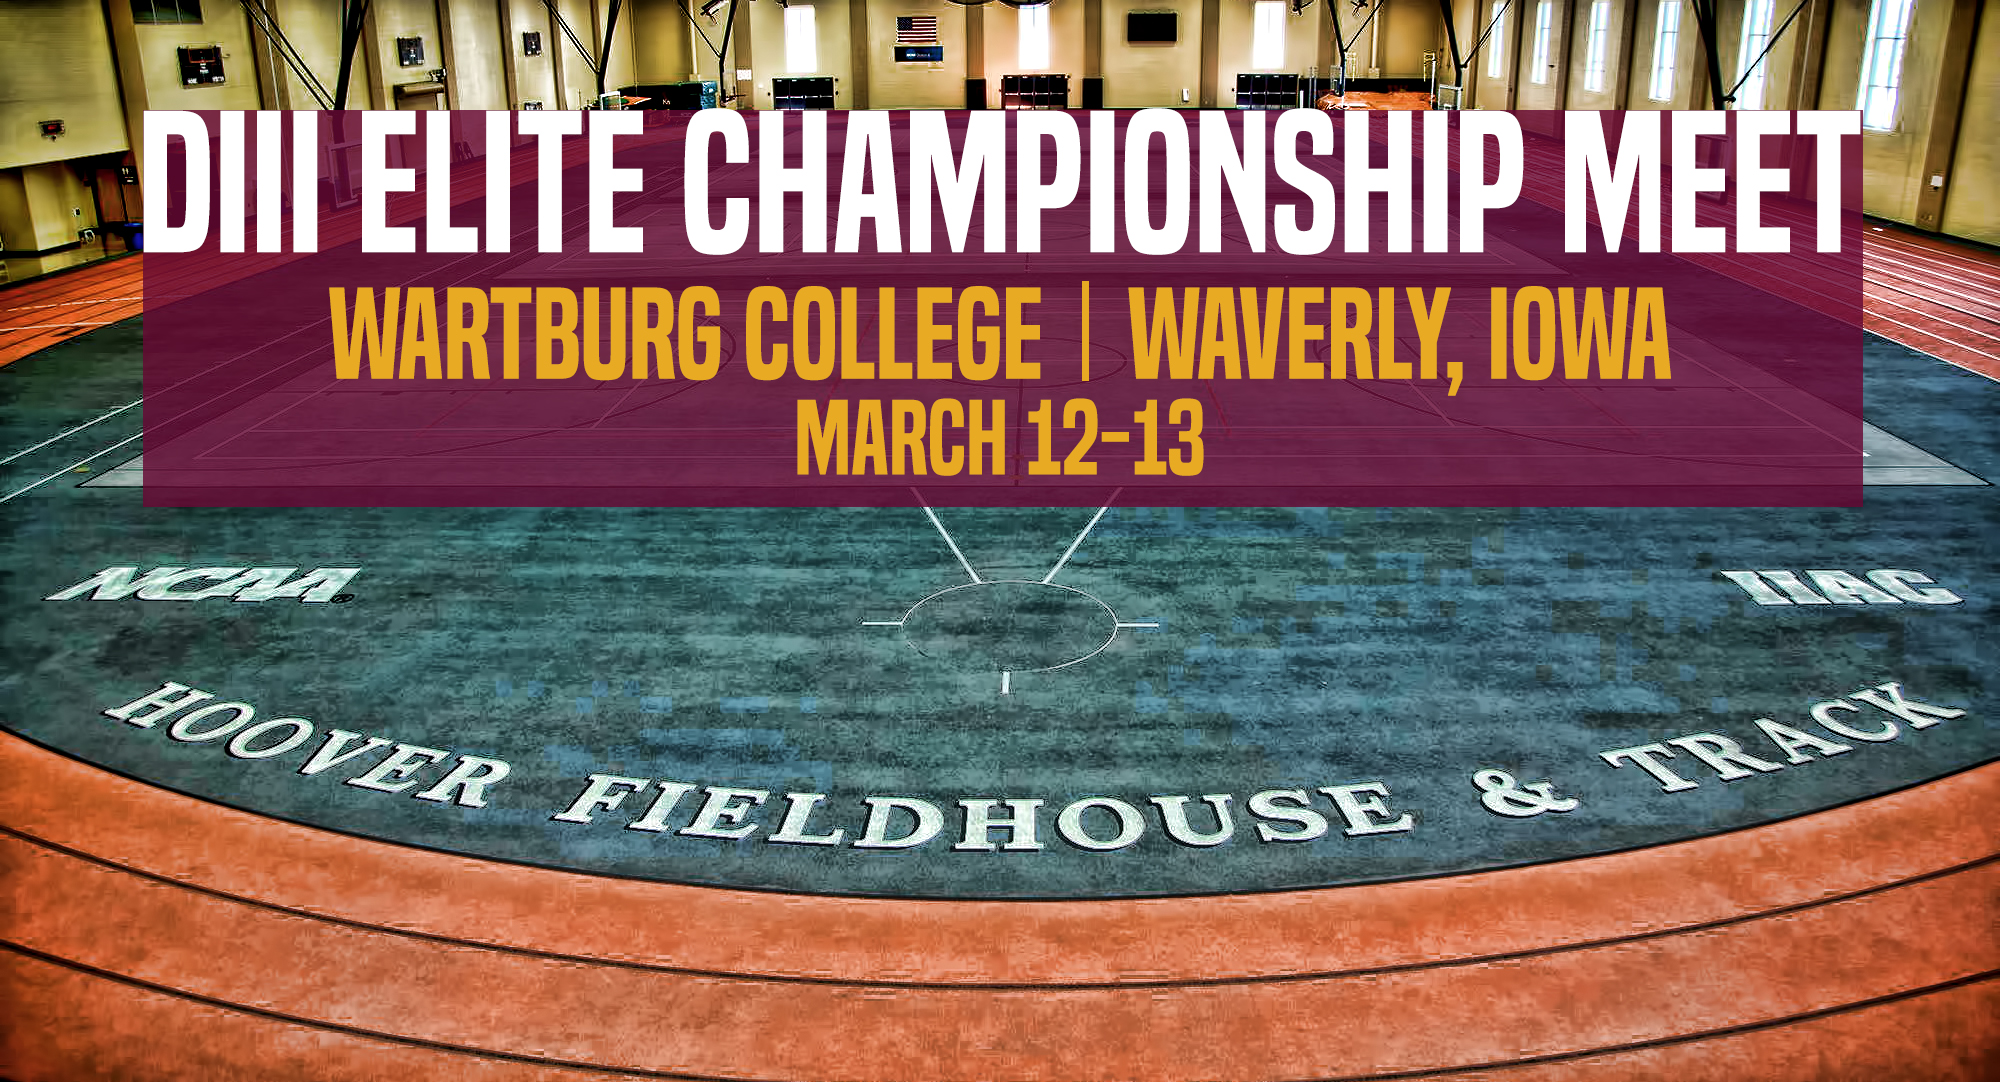 Josie Herrmann, Meritt Miller, Cayle Hovland and Jacey Schlosser will all represent the Cobbers at the DIII Elite Championship Meet at Wartburg in Waverly, Iowa.